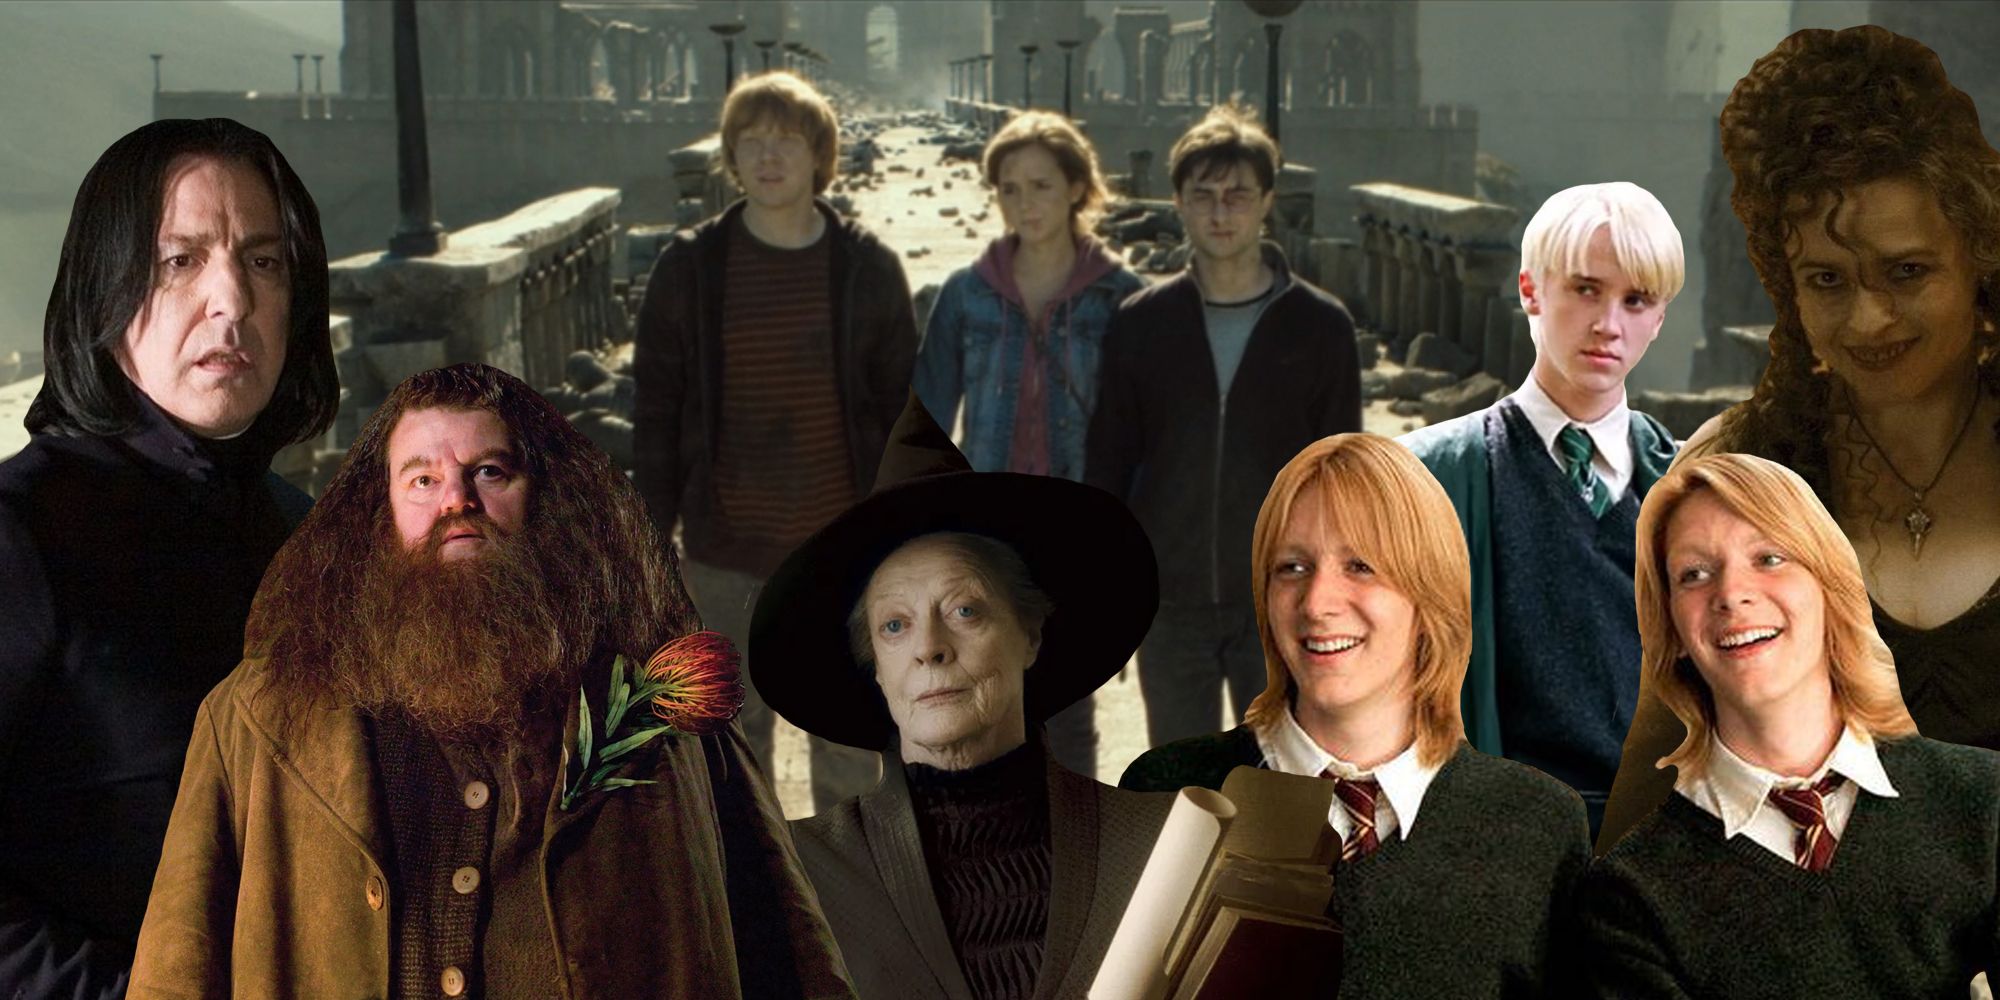 Snape, Hagrid, The Golden Trio, McGonagall, Fred and George, Draco, Bellatrix